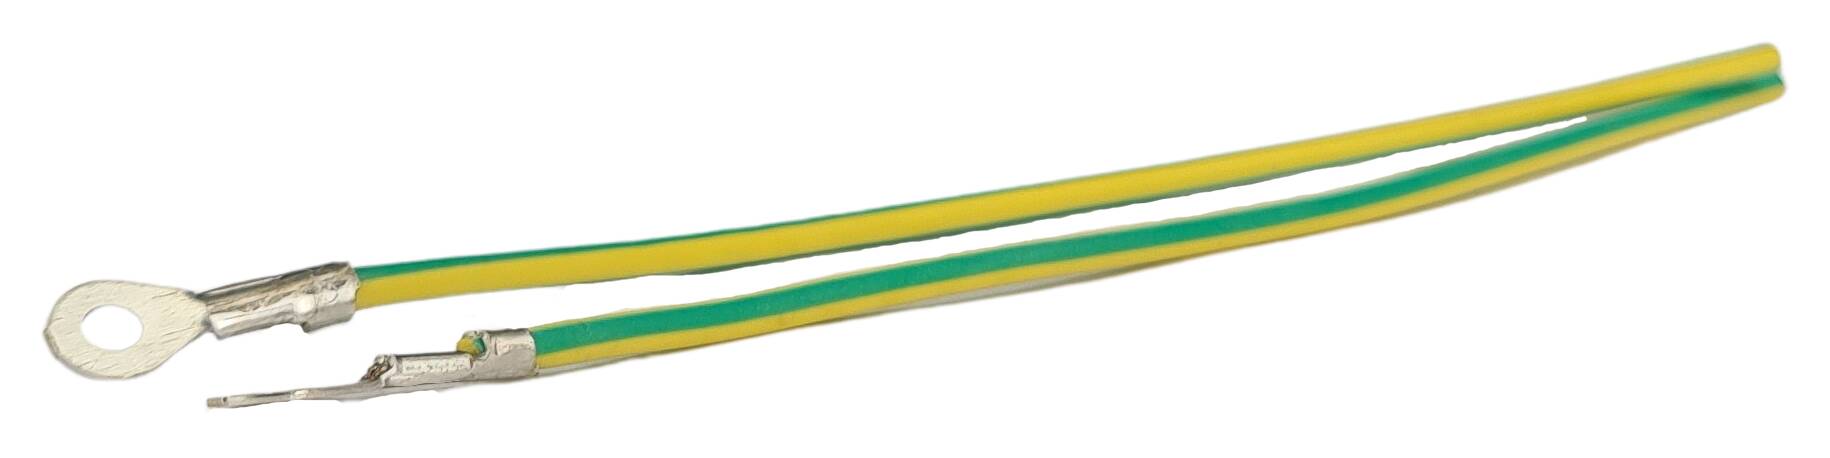 Kabel-Zuschnitt 1x0,75 SIF 125 mm glatt-Ringöse M3 grün-gelb